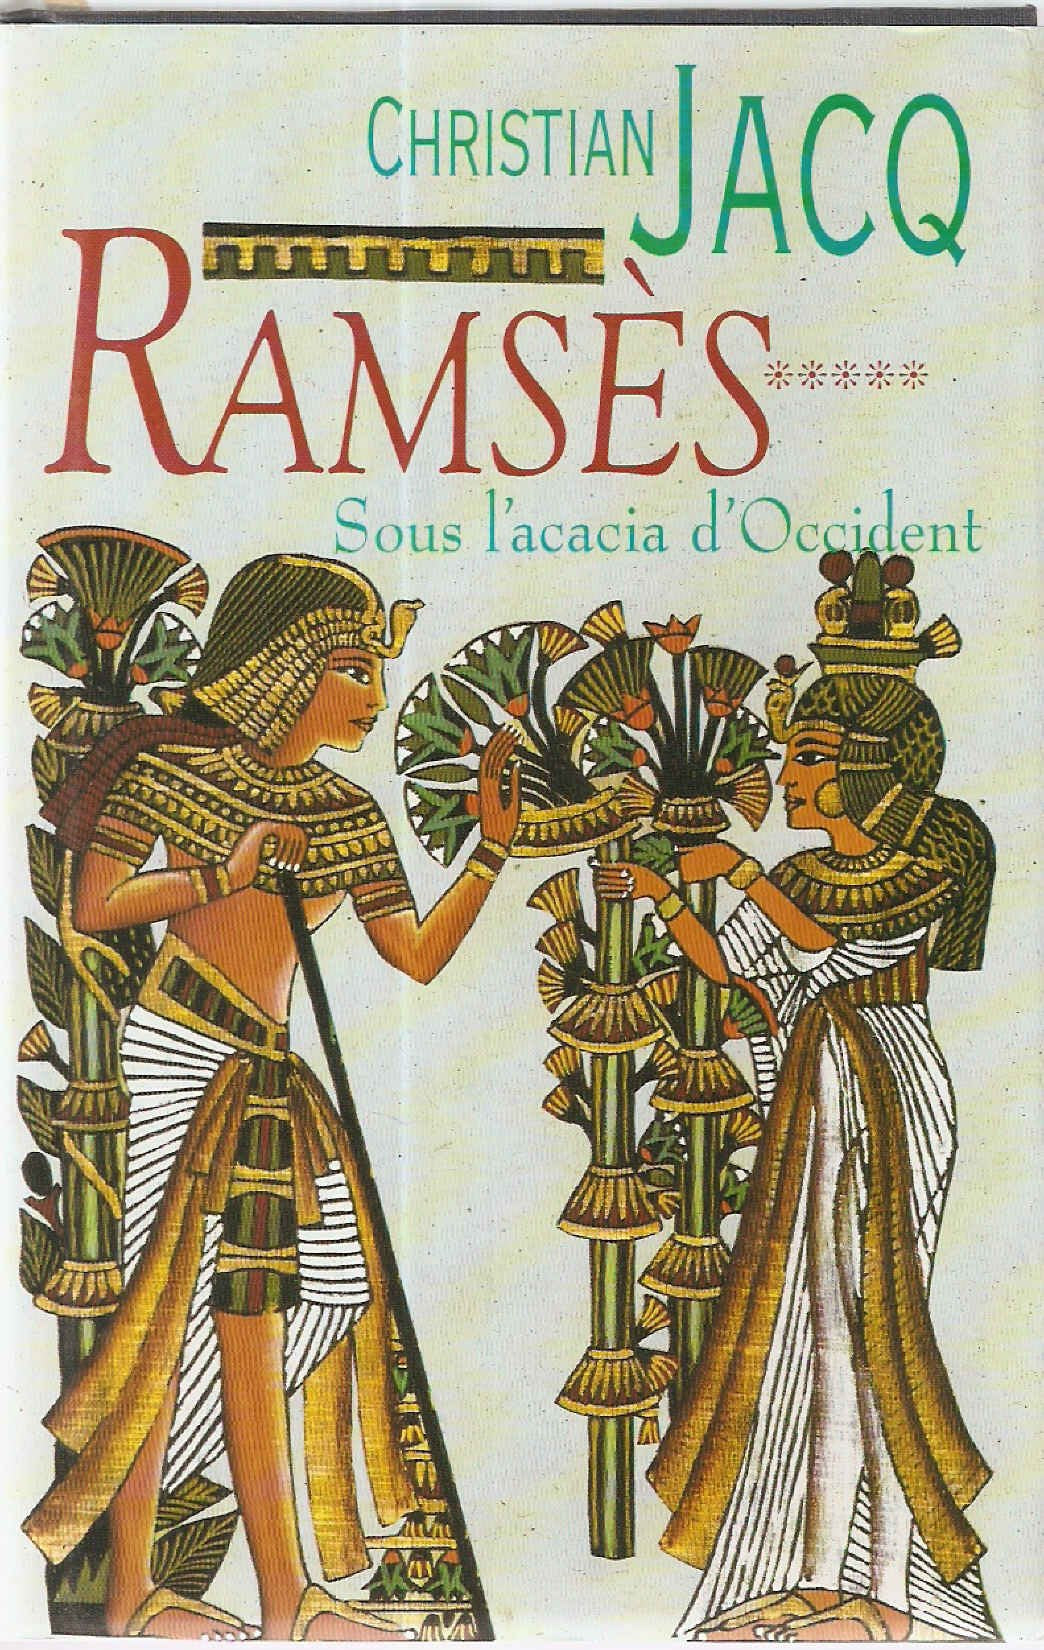 Livre ISBN 2744109479 Ramsès # 5 : Sous l'acacia d'Occident (Christian Jacq)